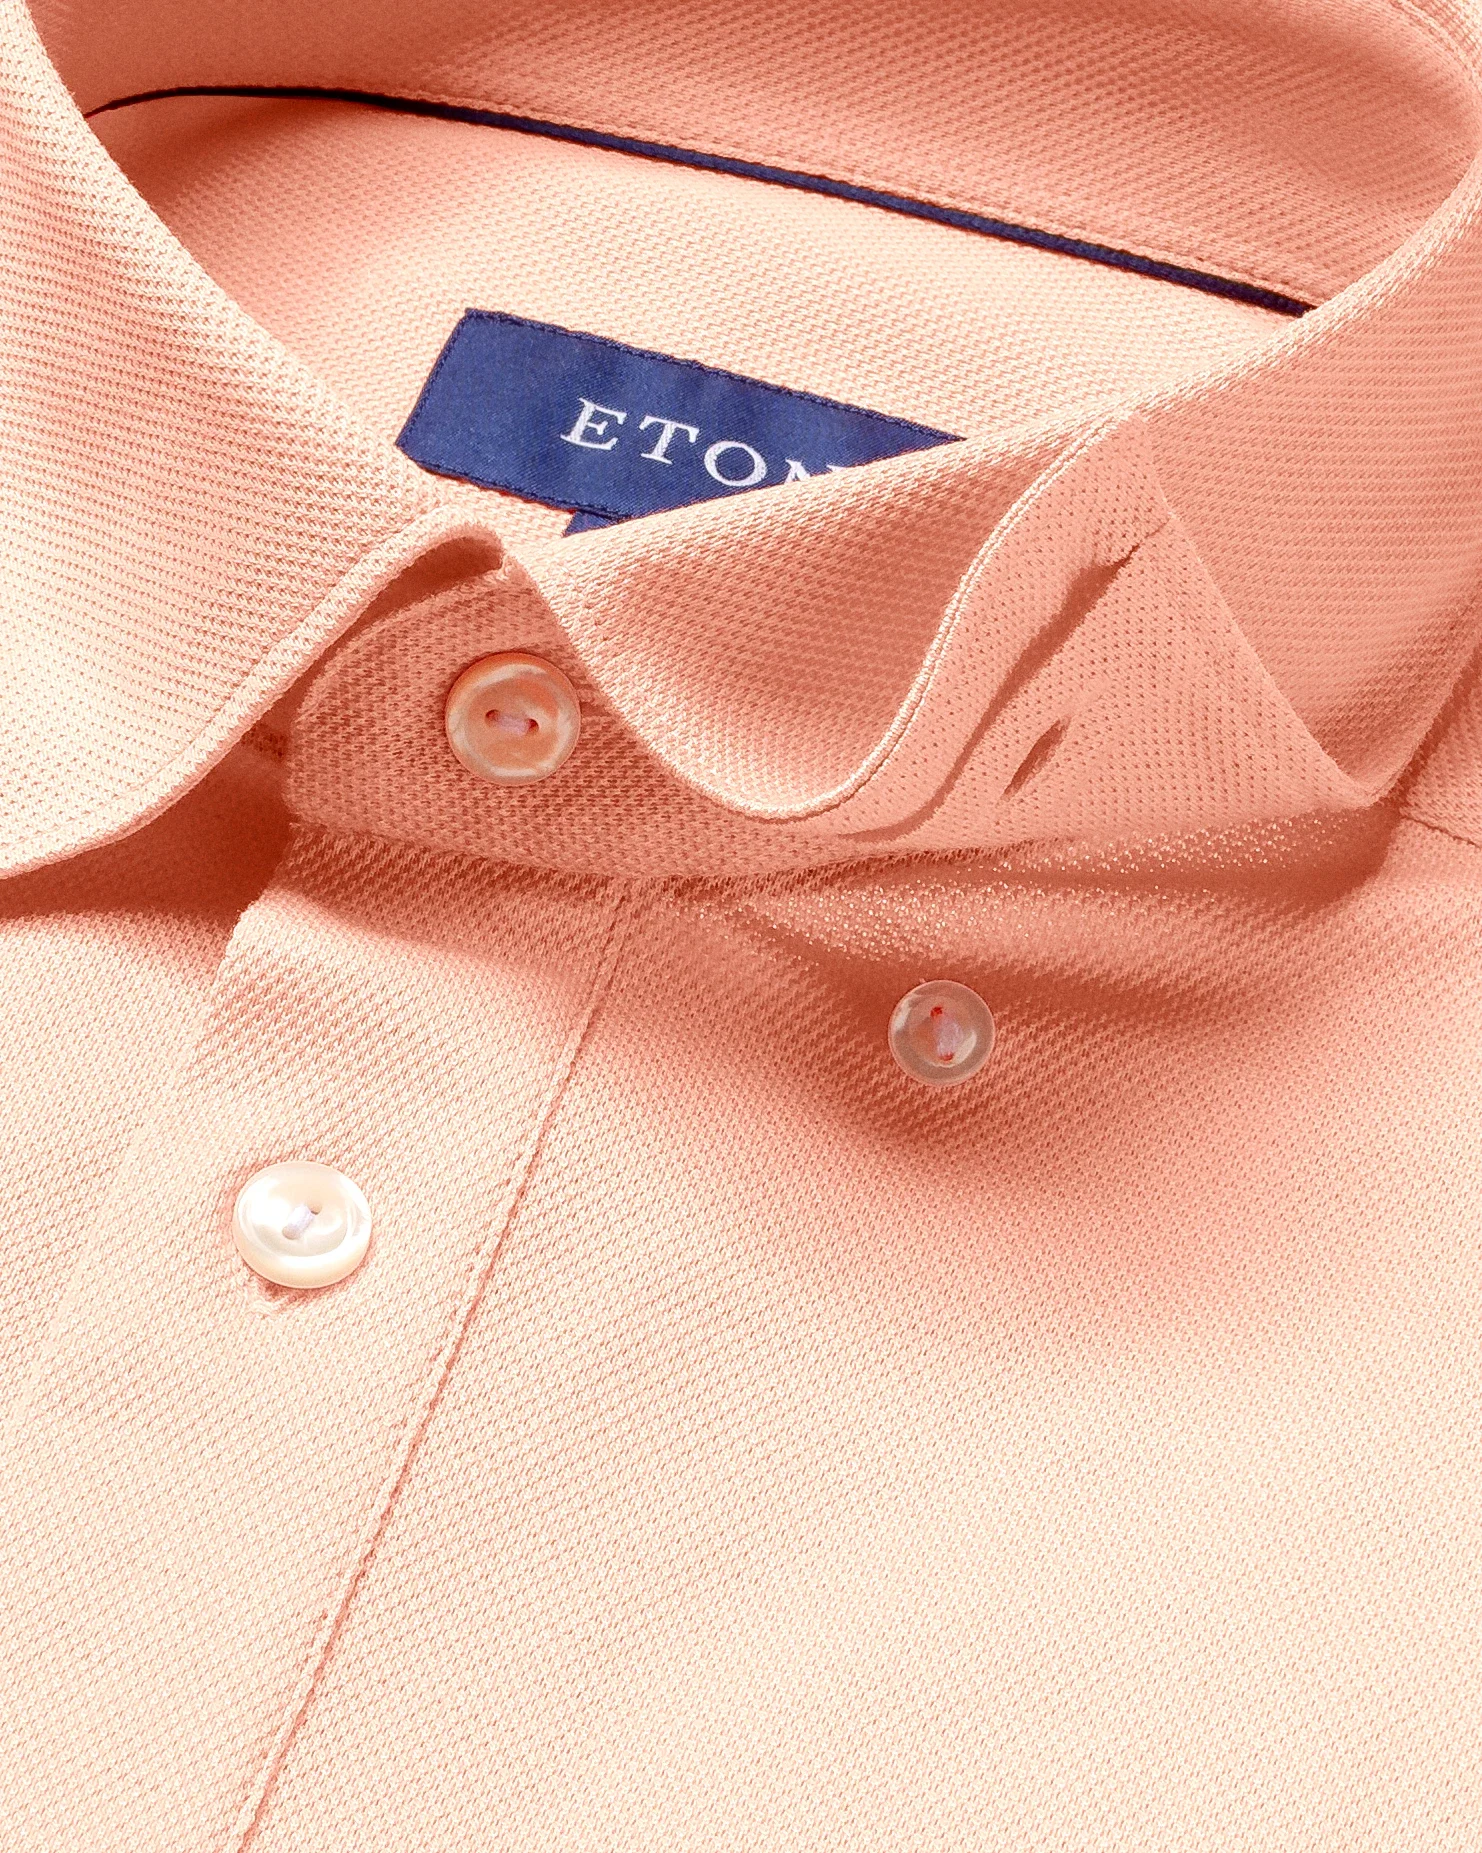 Eton - pink polo shirt button under